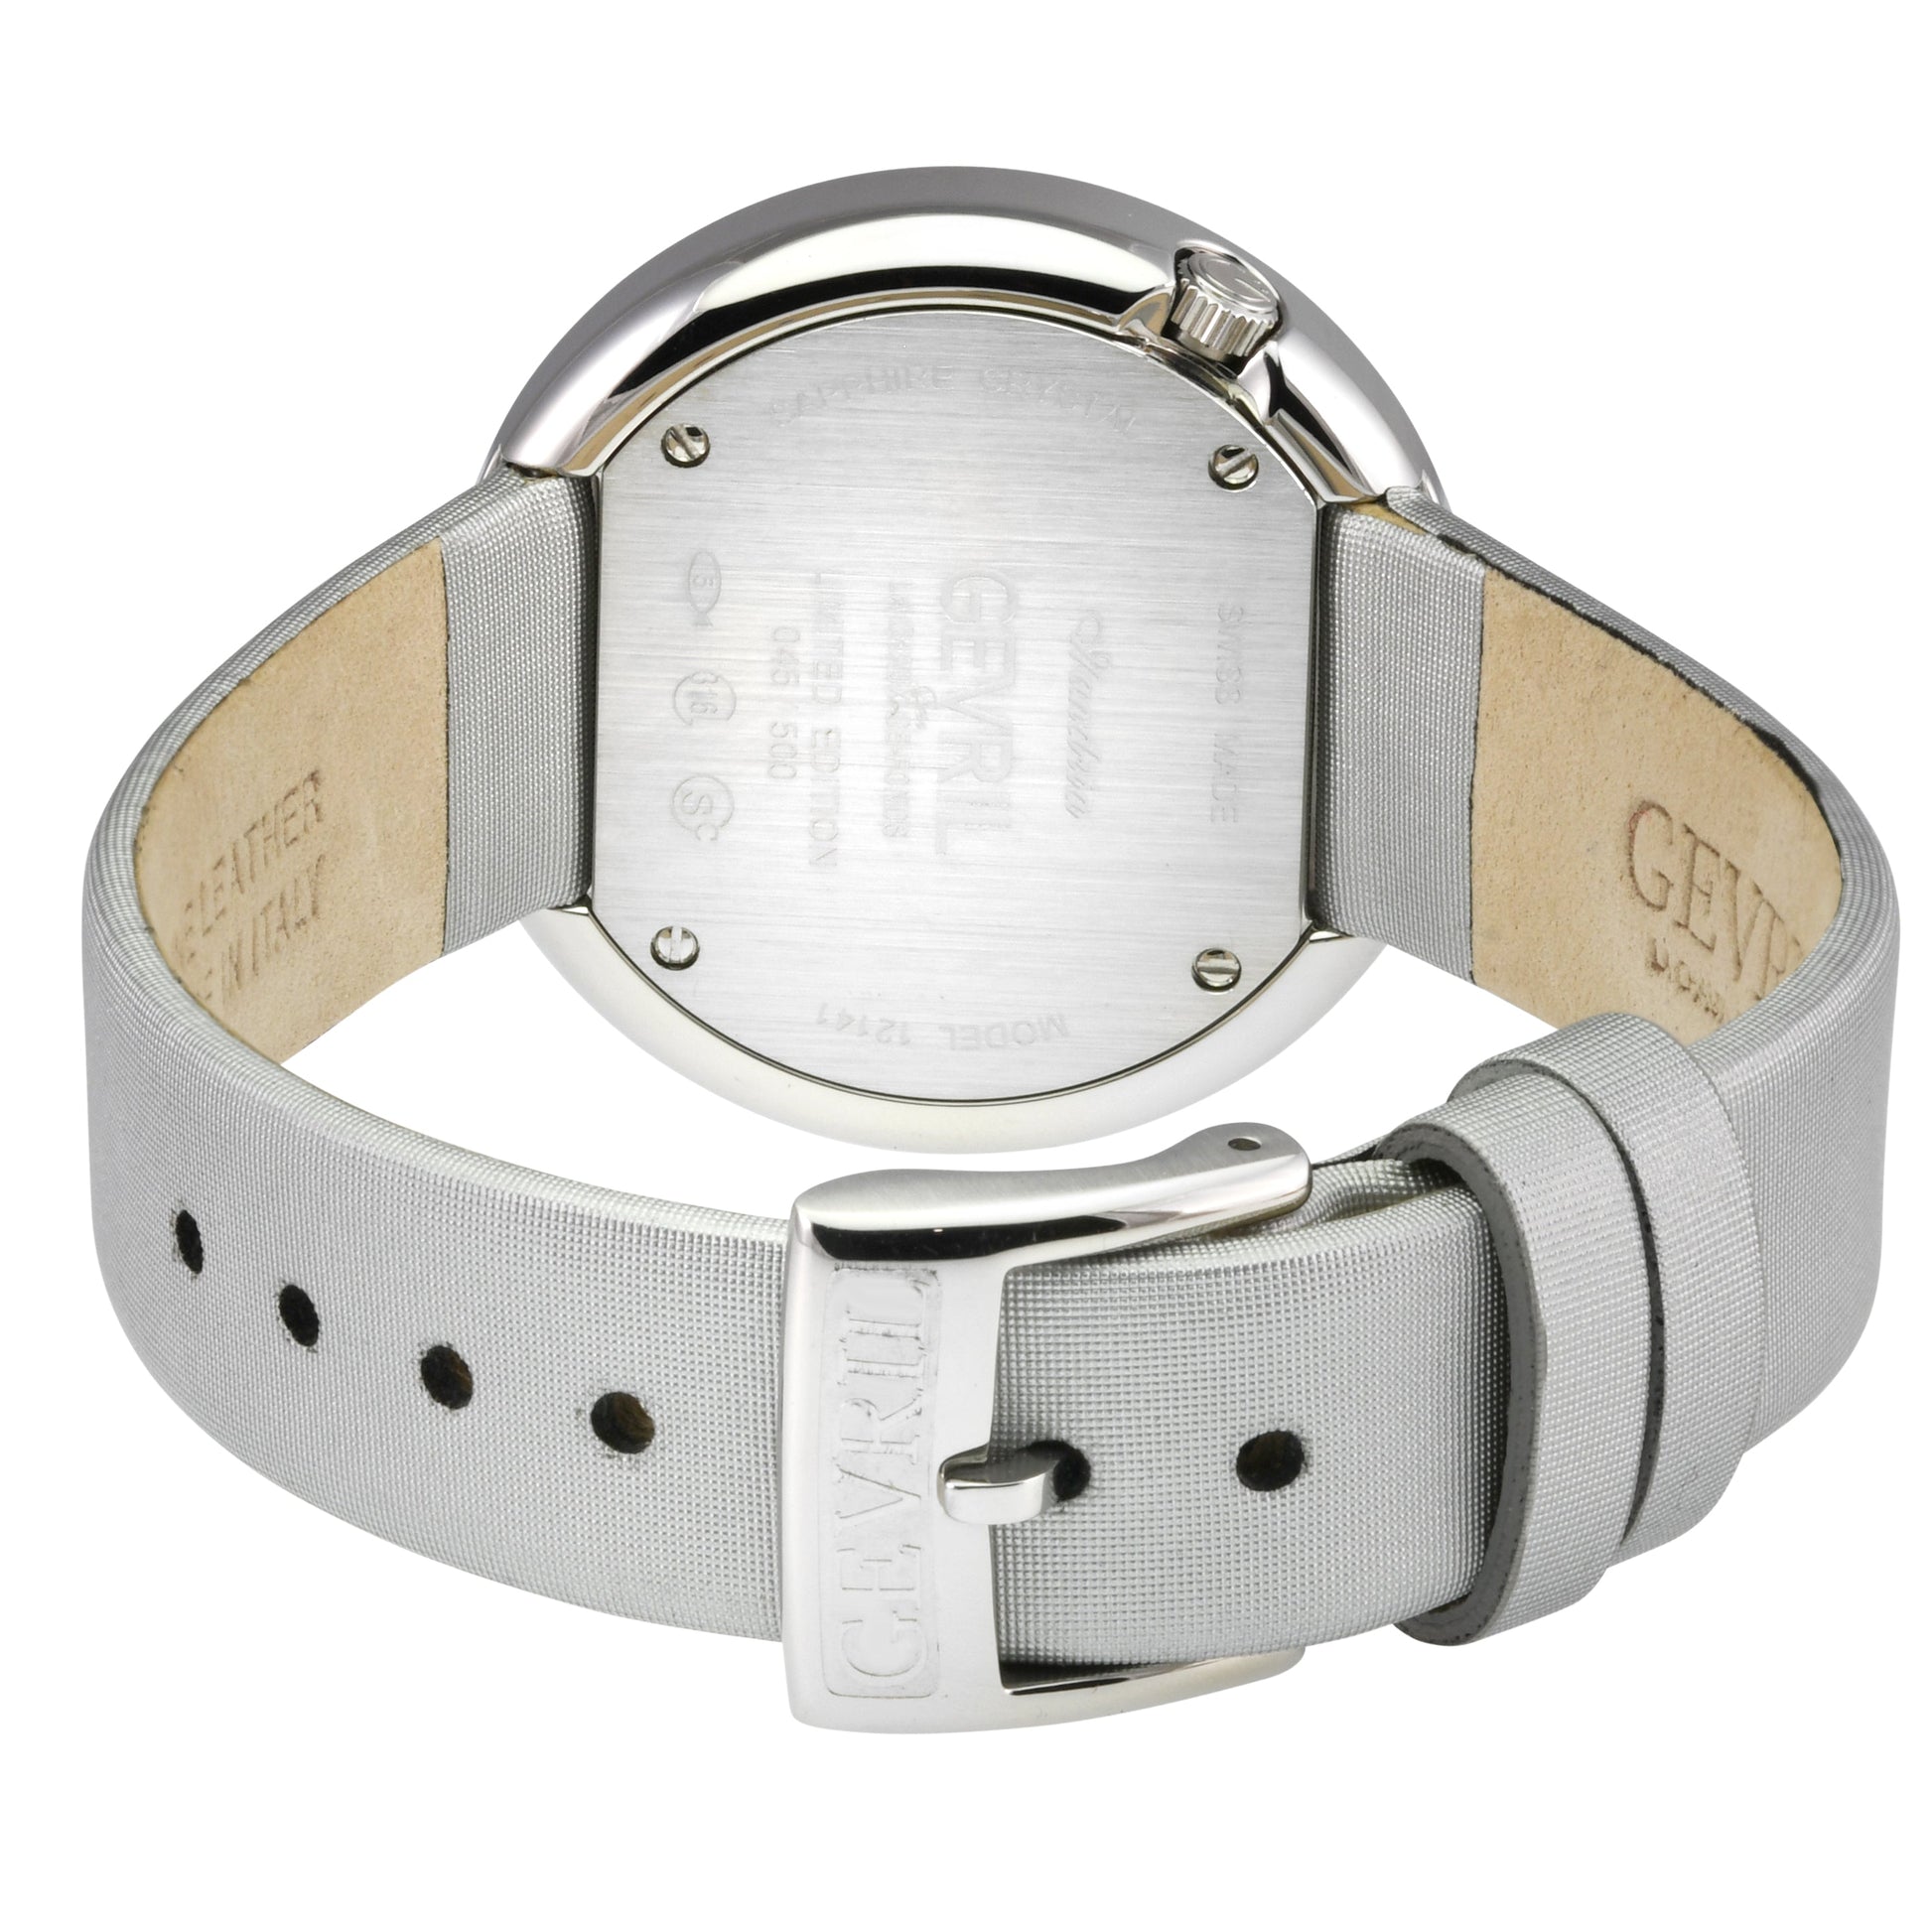 Gevril-Luxury-Swiss-Watches-Gevril Gandria Diamond-12141